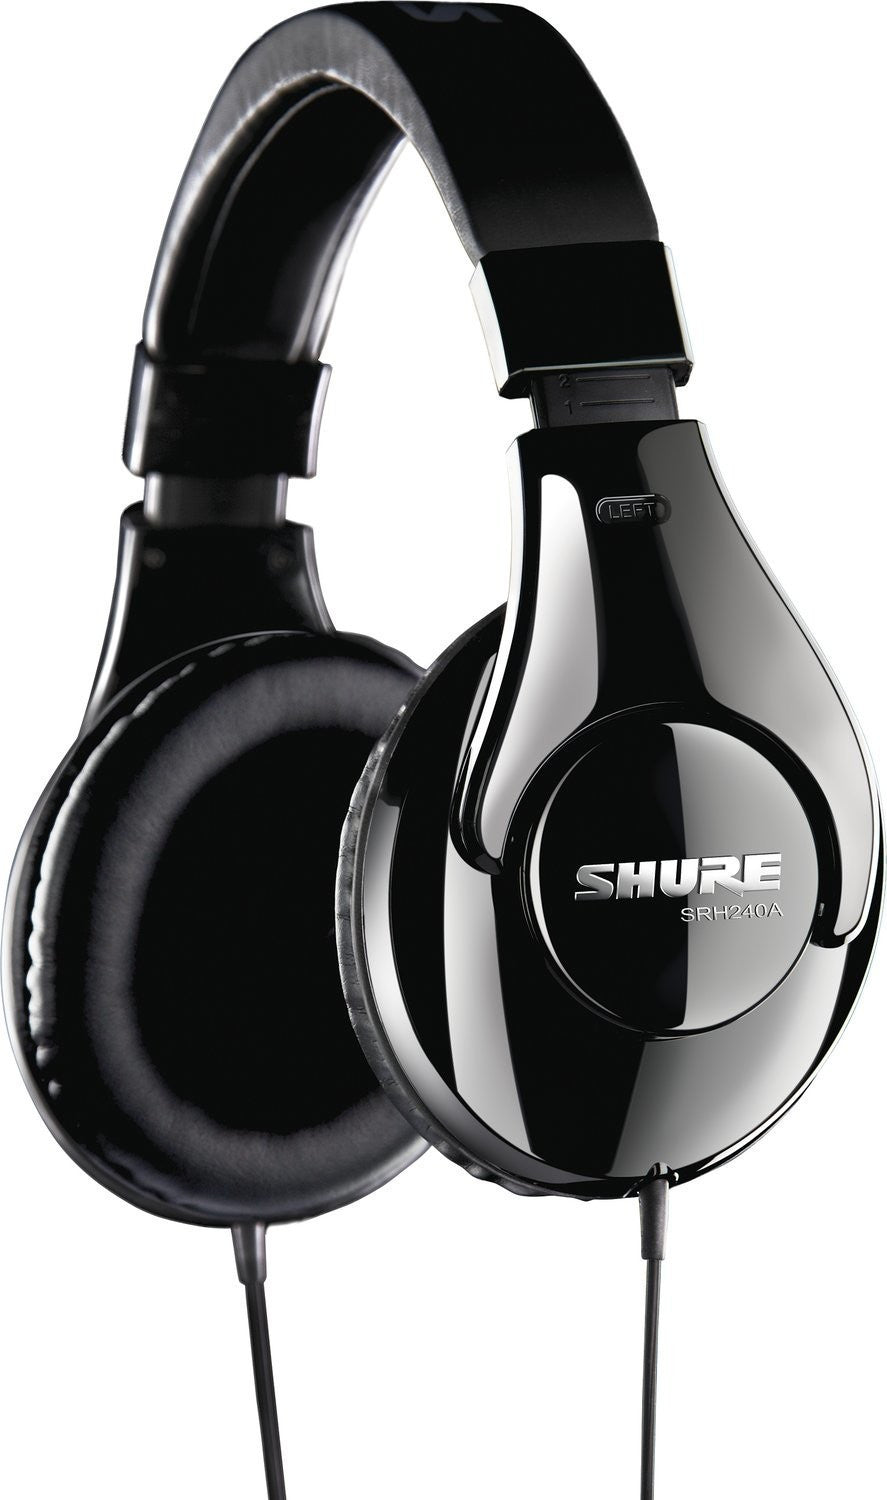 Shure SRH240A Studio Headphones (Closed Back) - Black